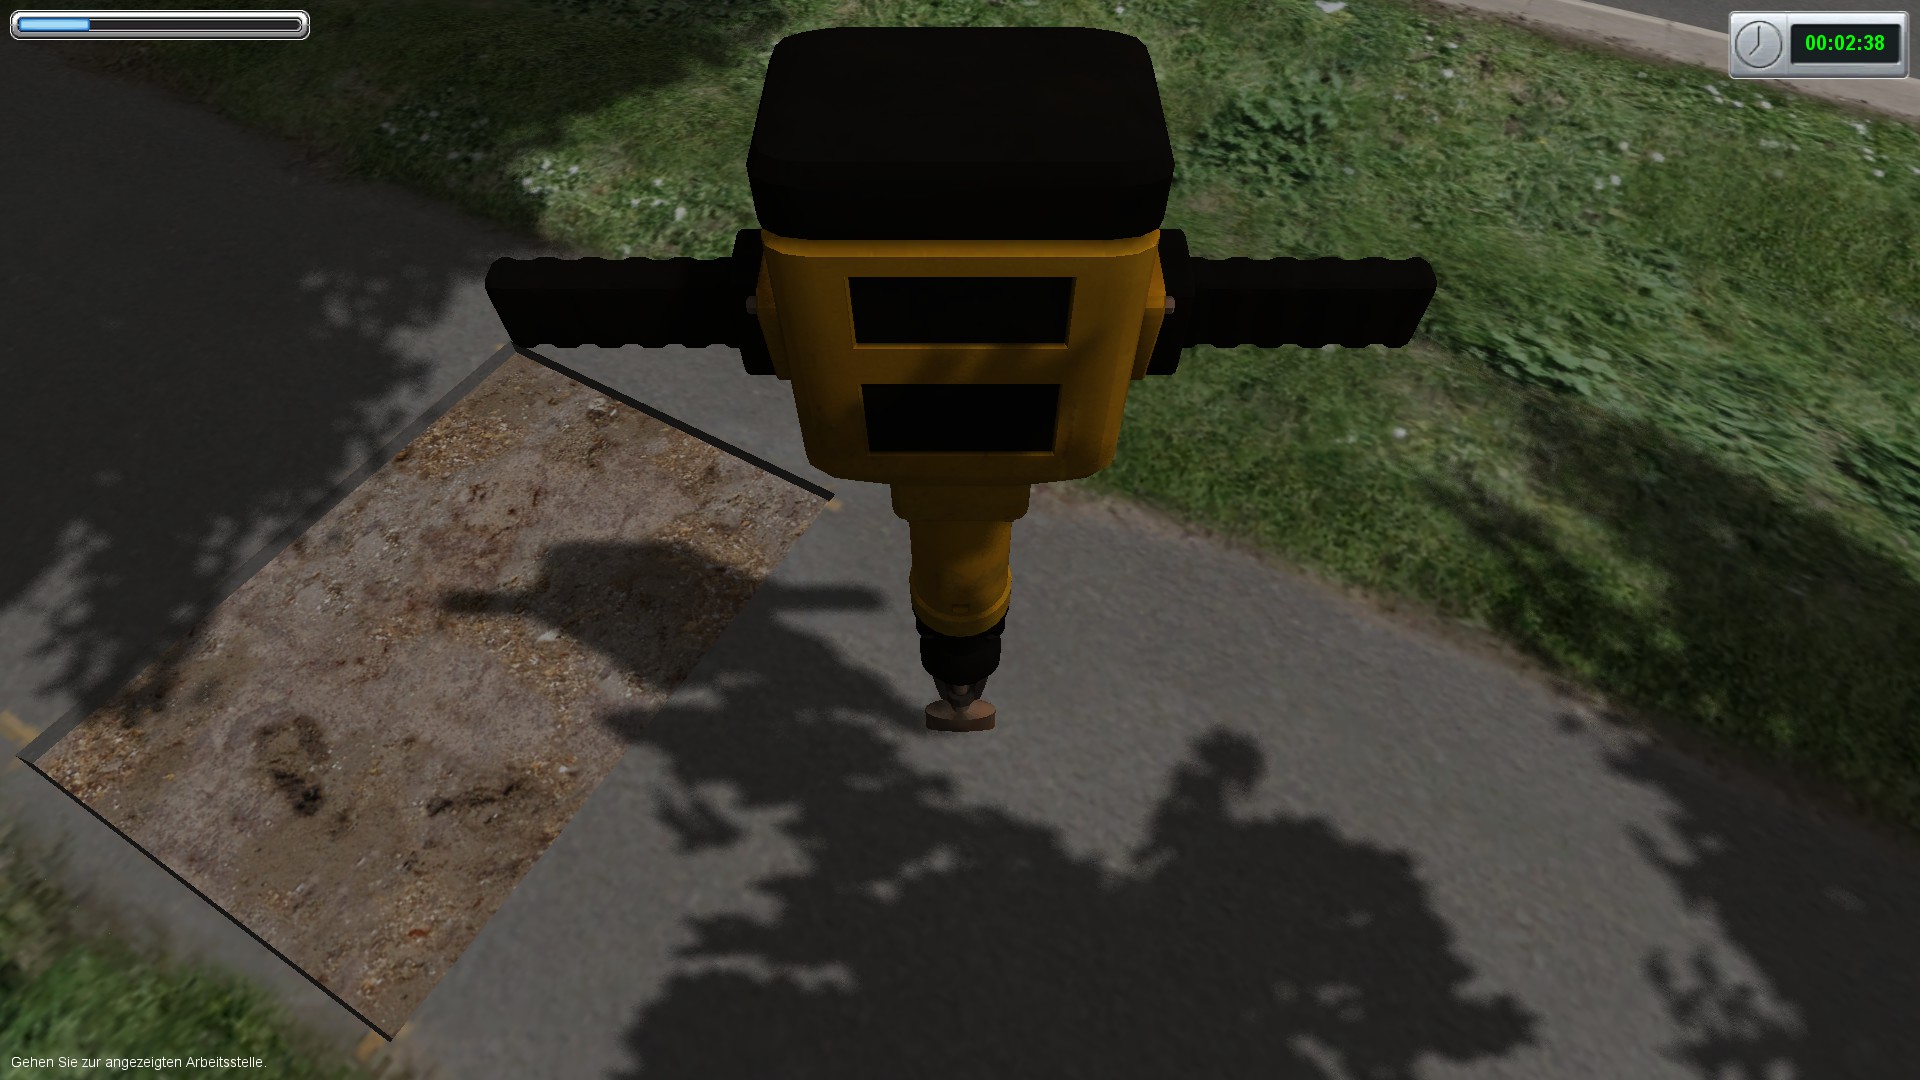 Roadworks - The Simulation screenshot